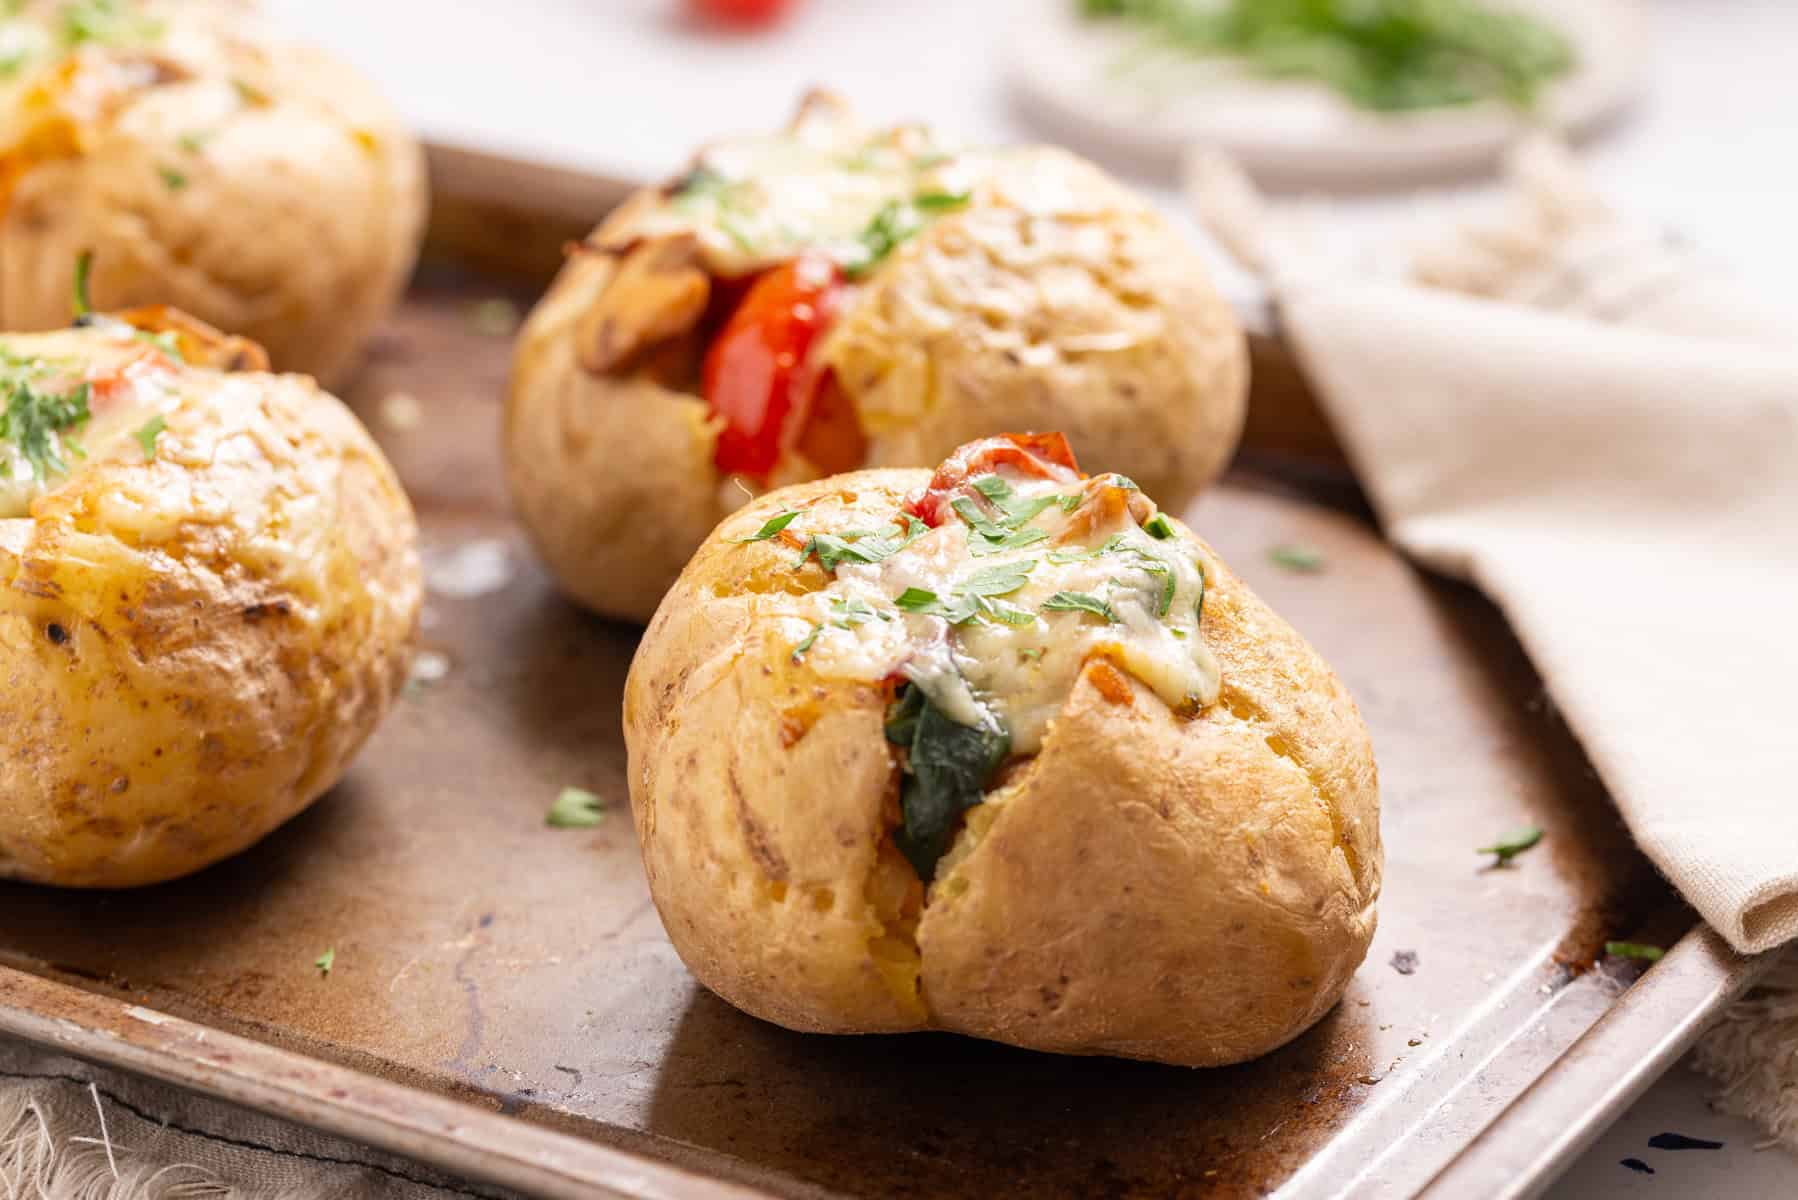 A close-up image of stuffed baked potatoes.